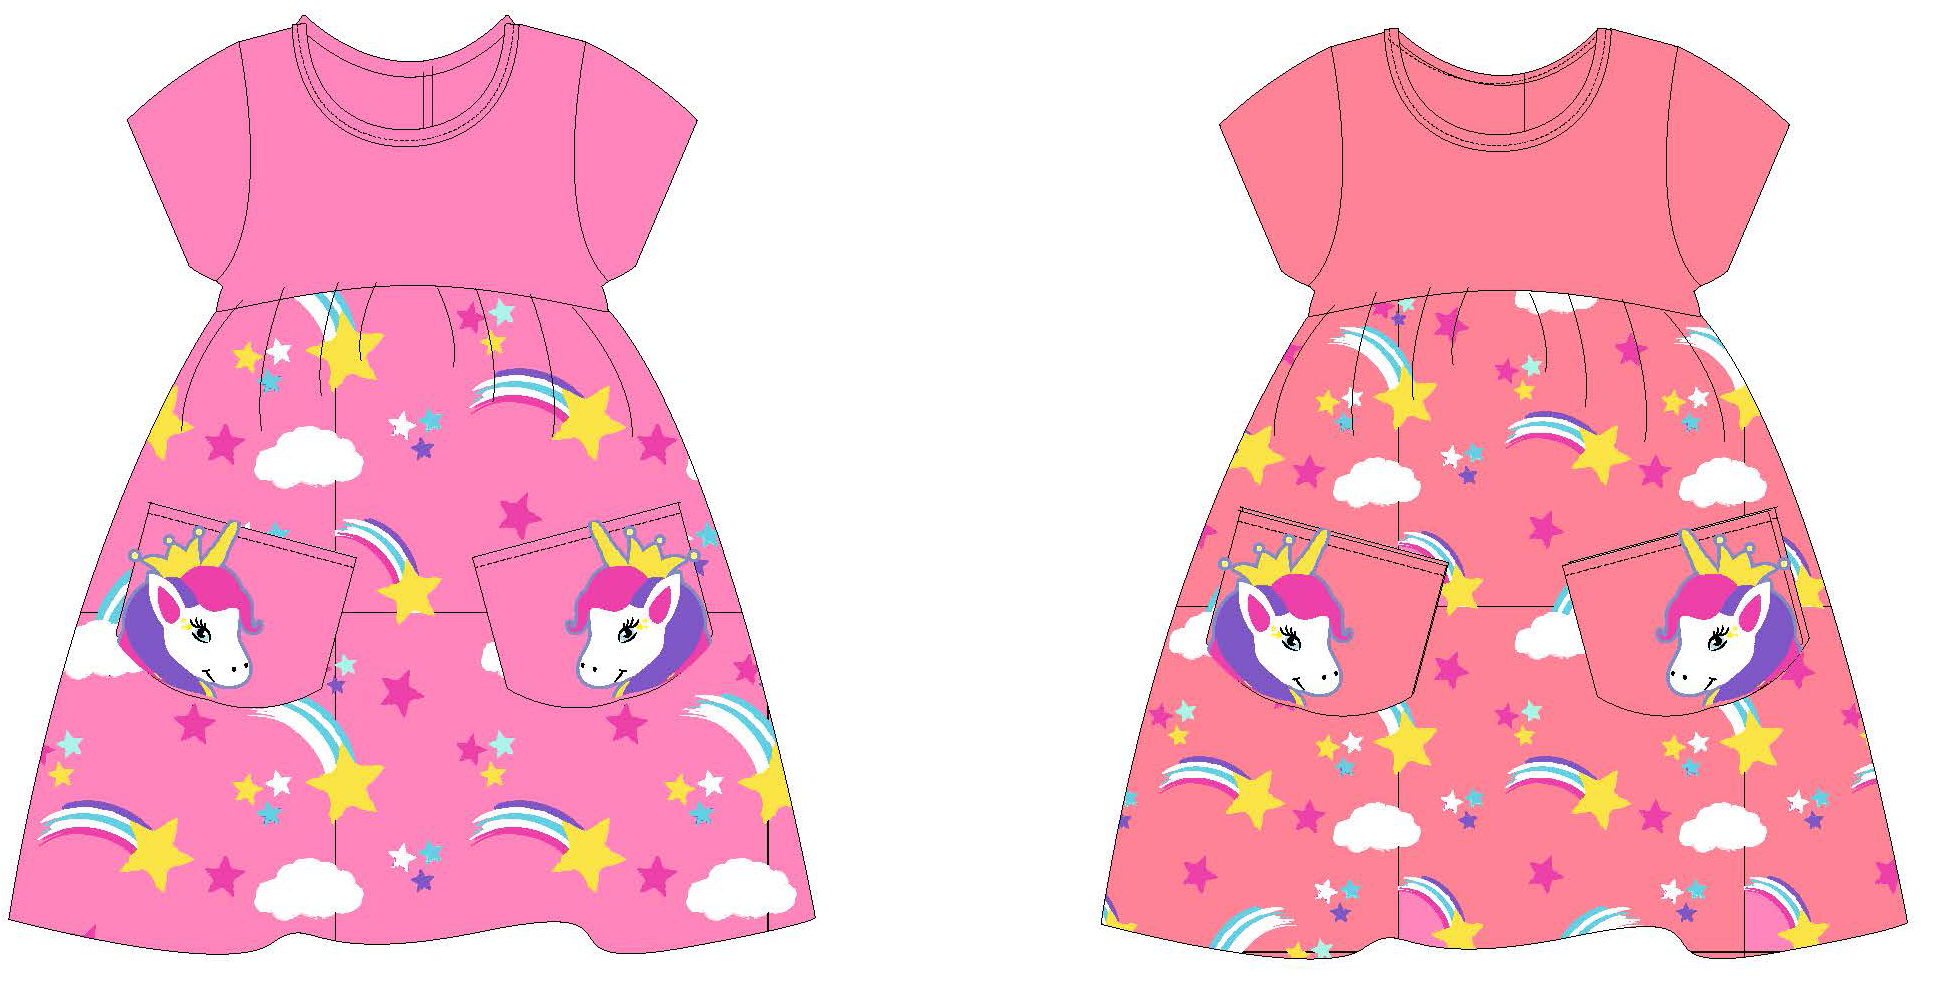 Toddler Girl's Short-Sleeved Knit DRESS w/ Cargo Pockets  - Unicorn & Rainbow Star Print - Size 2T-4